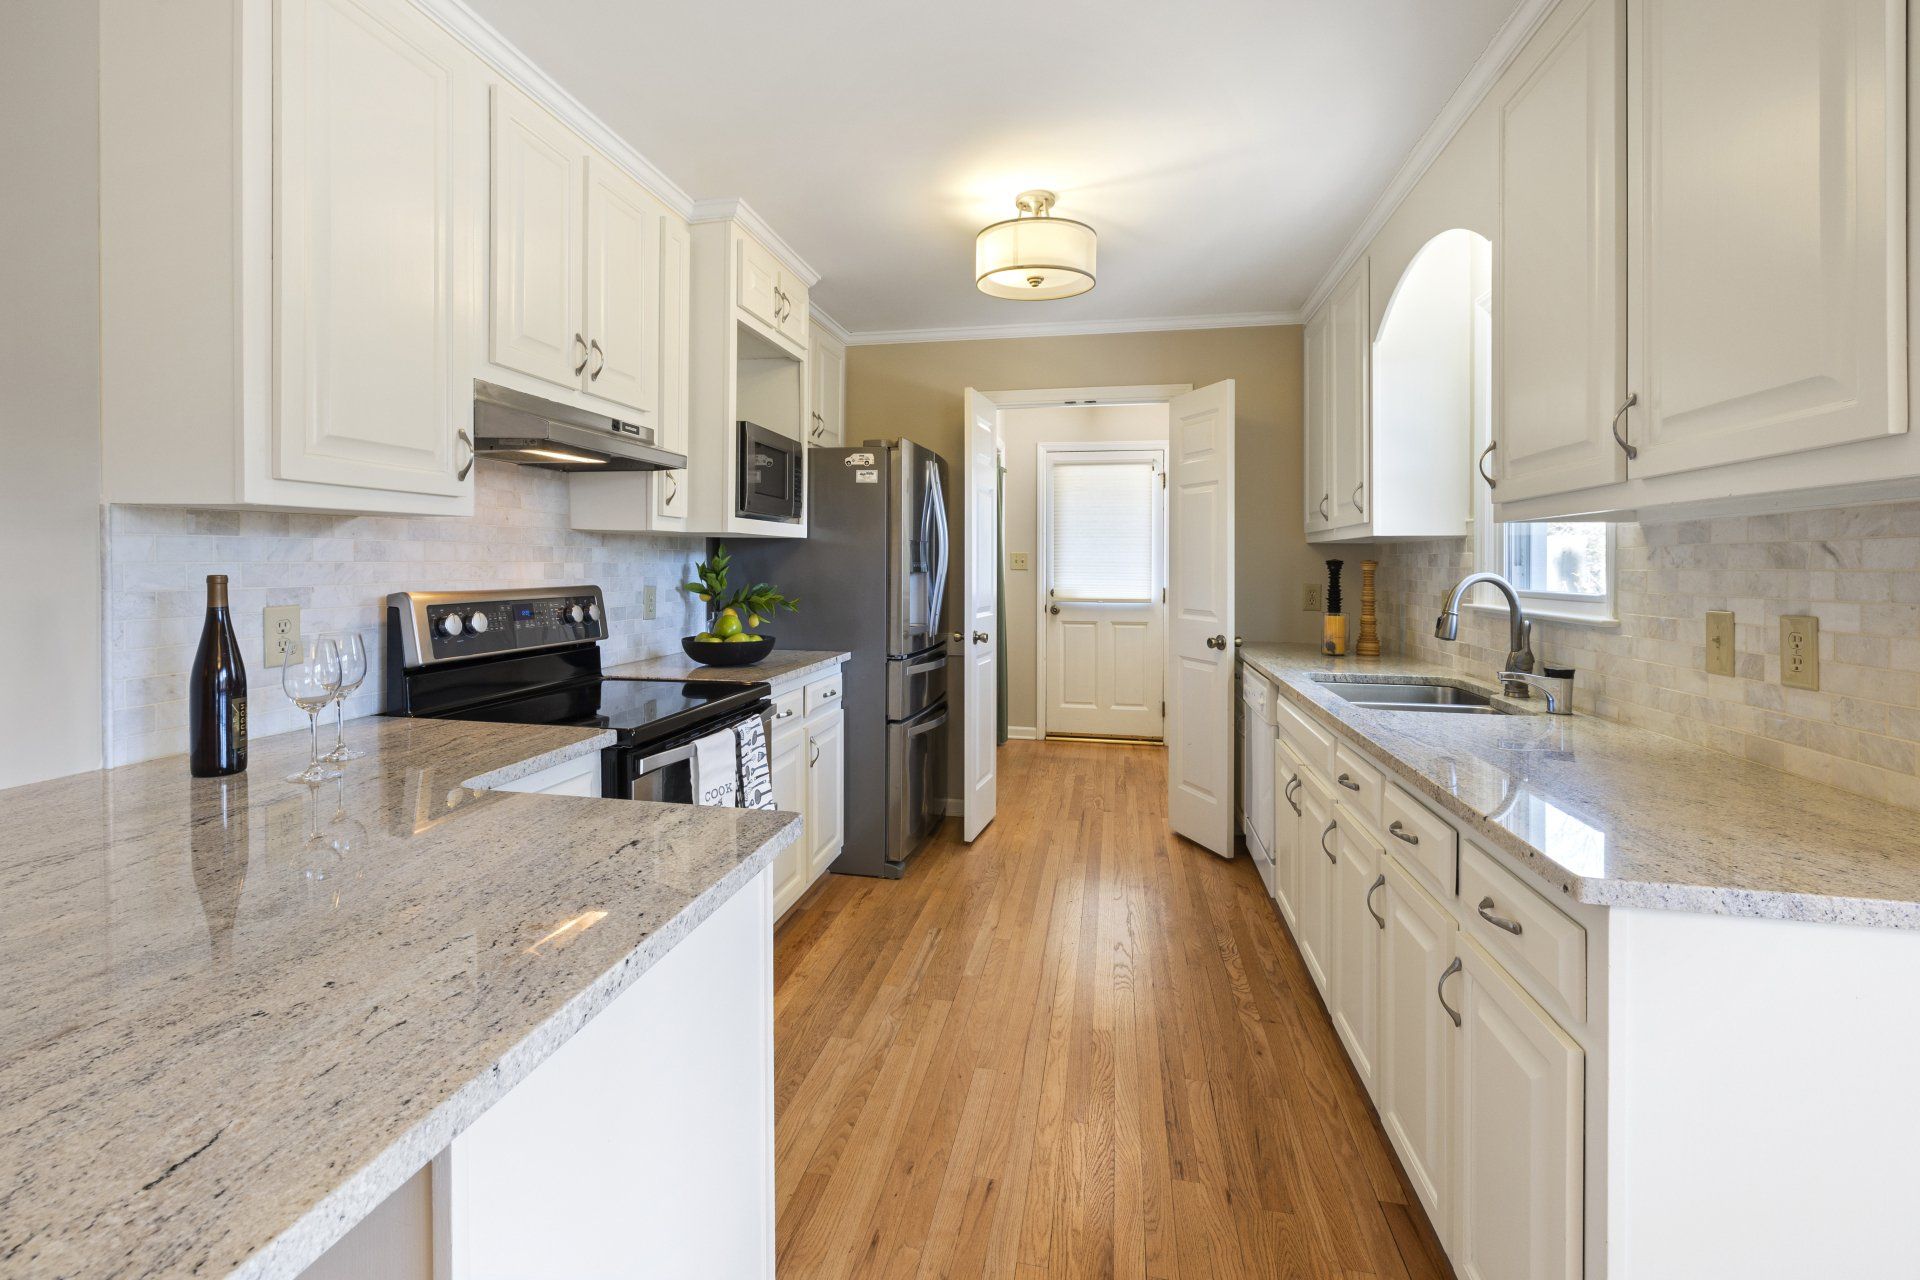 Gray glossy granite kitchen countertops with a sleek, modern finish.